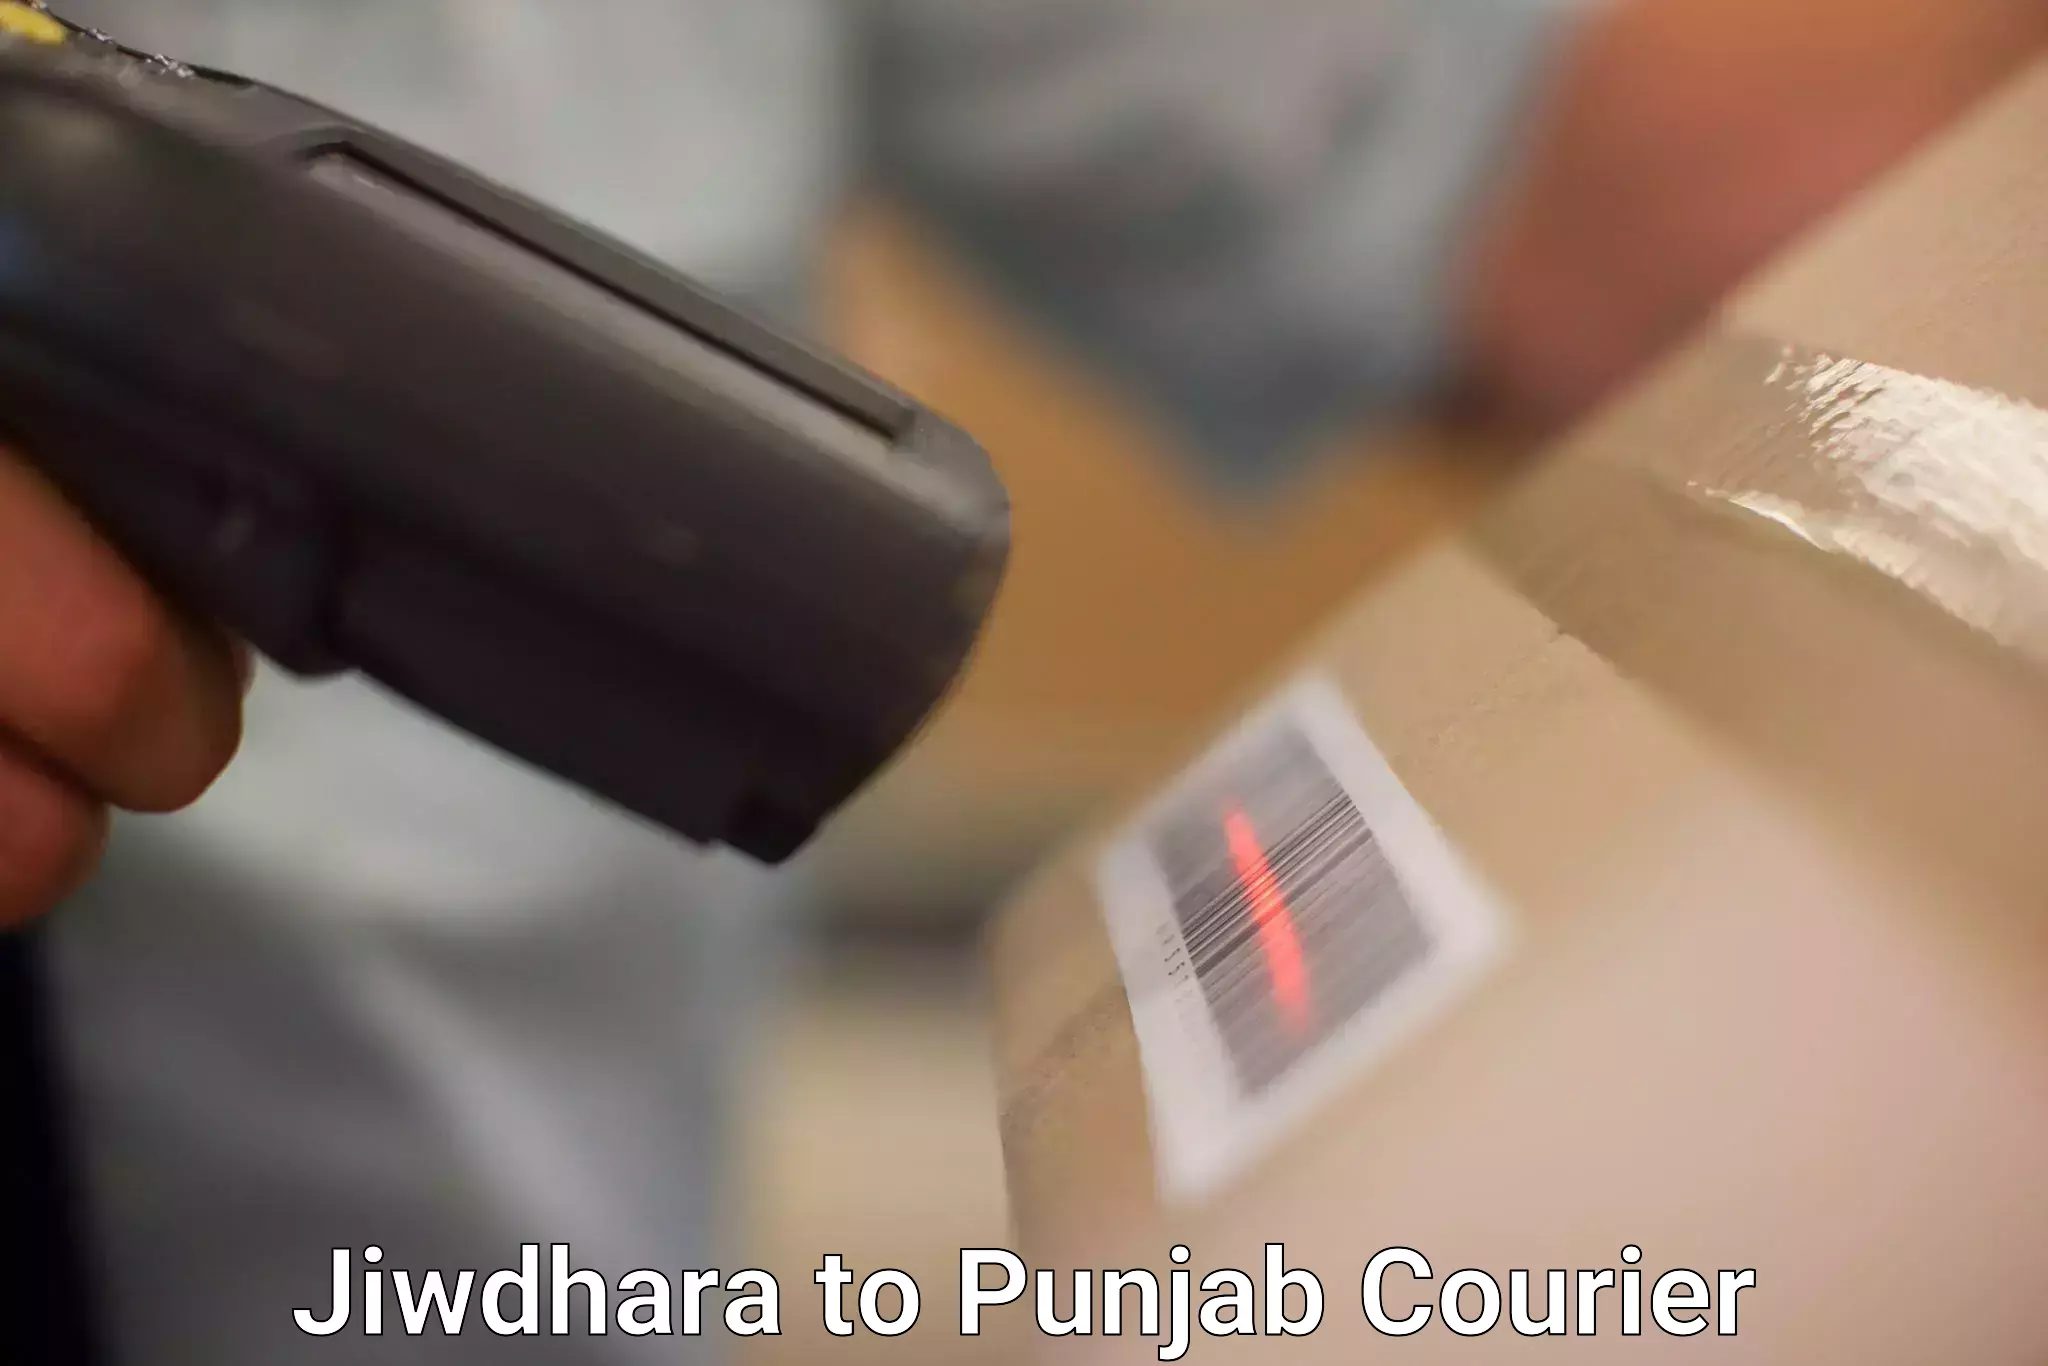 Seamless shipping experience Jiwdhara to Malerkotla